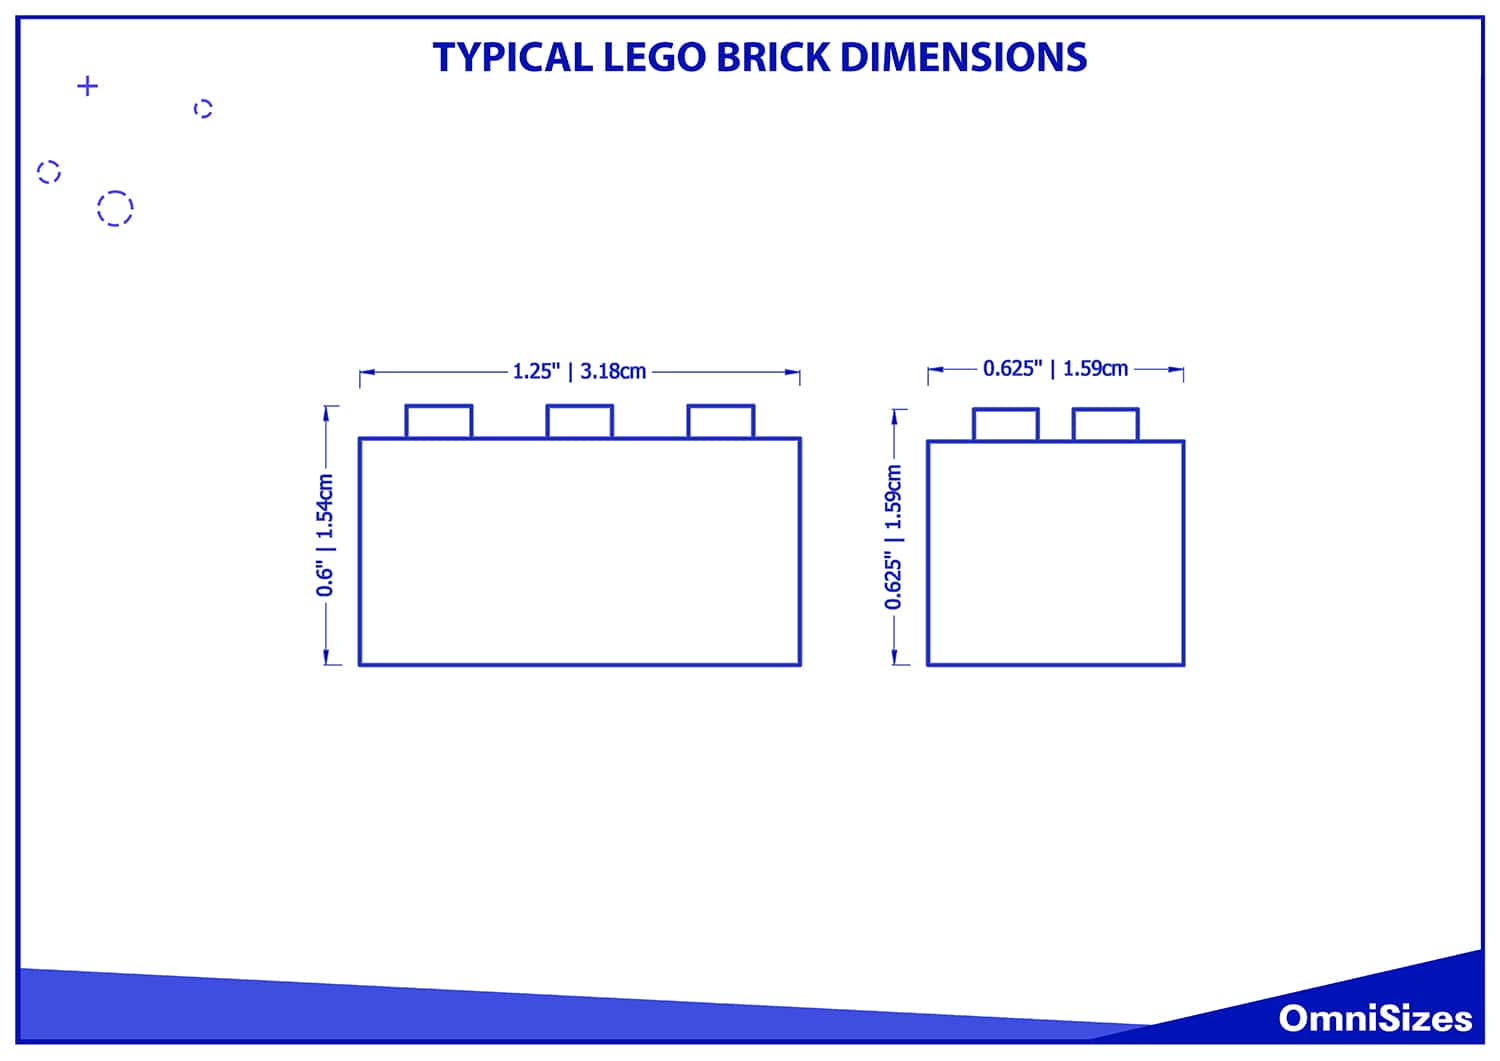 Typical lego brick dimensions